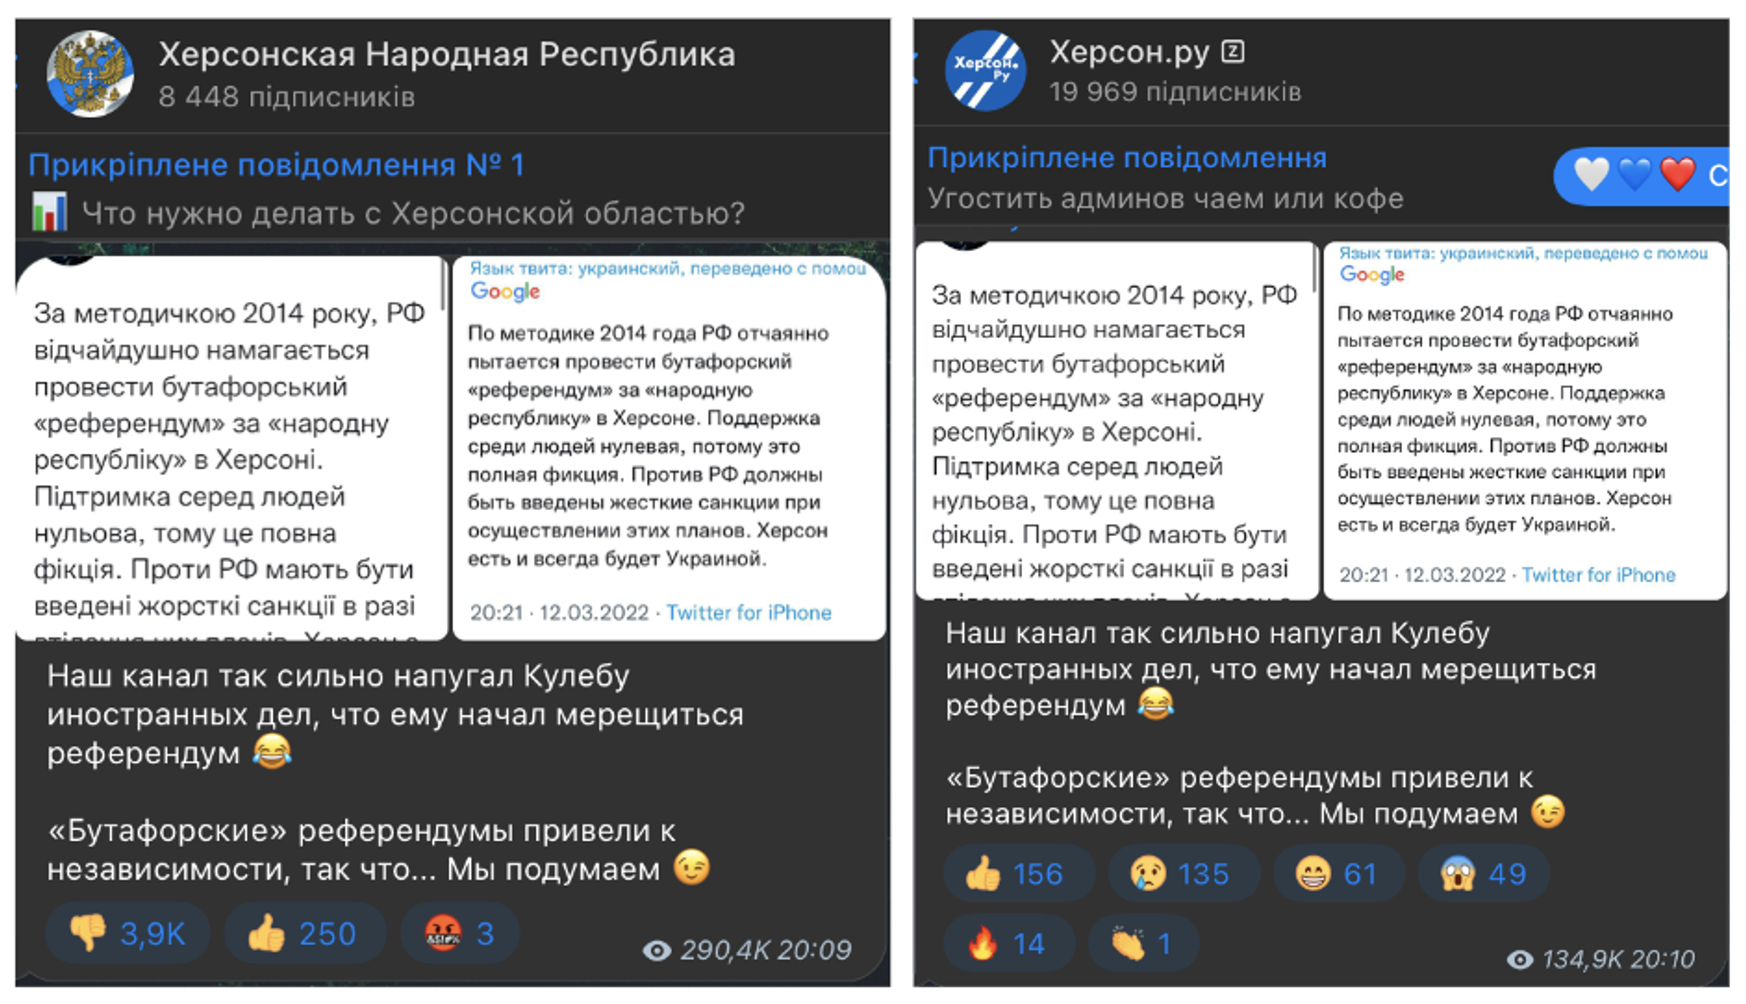 Как телеграмм перевести на русский язык на андроиде телефоне фото 110